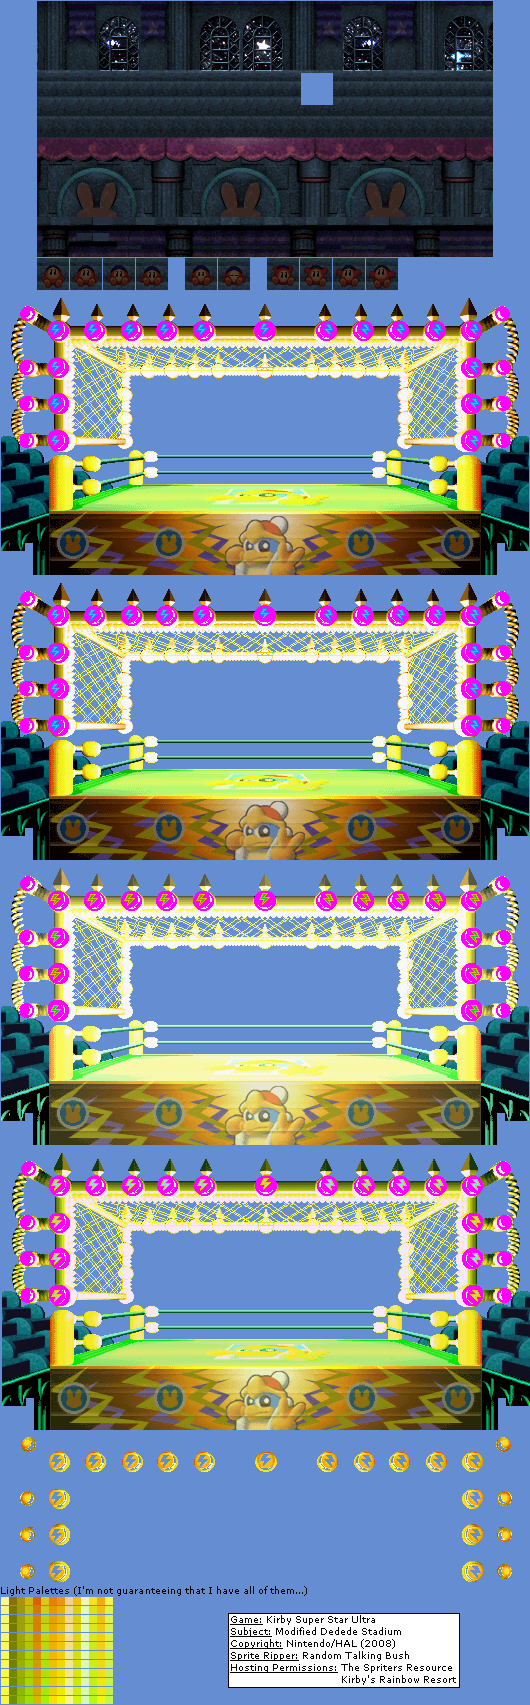 Kirby Super Star Ultra - Stage 5: The Revenge Stadium